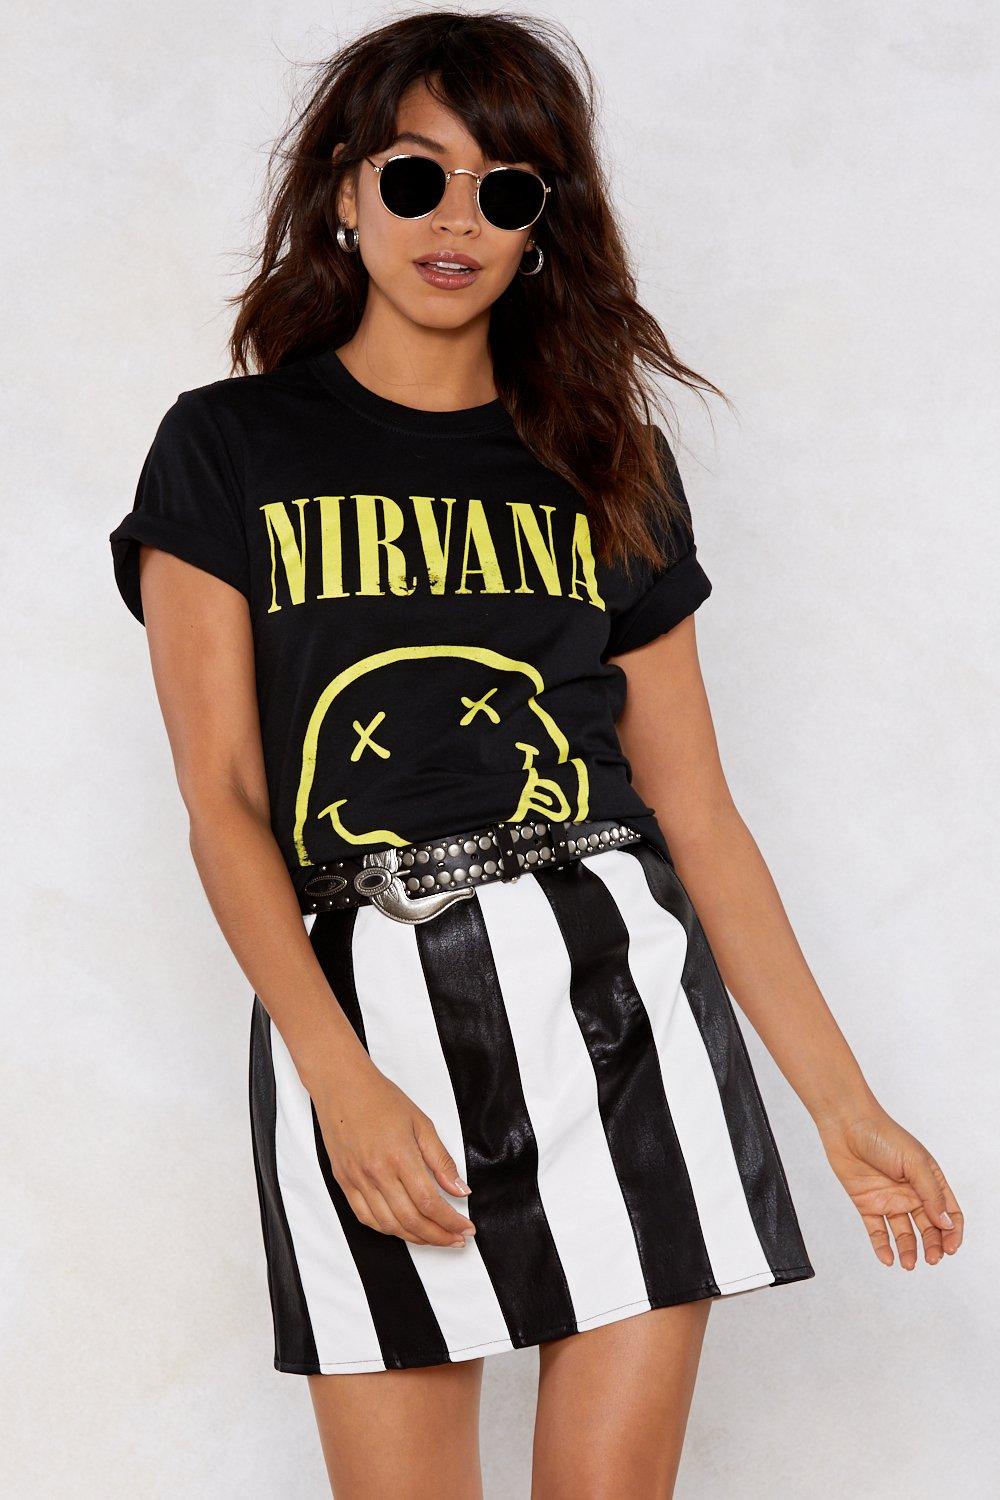 nirvana t shirt dress